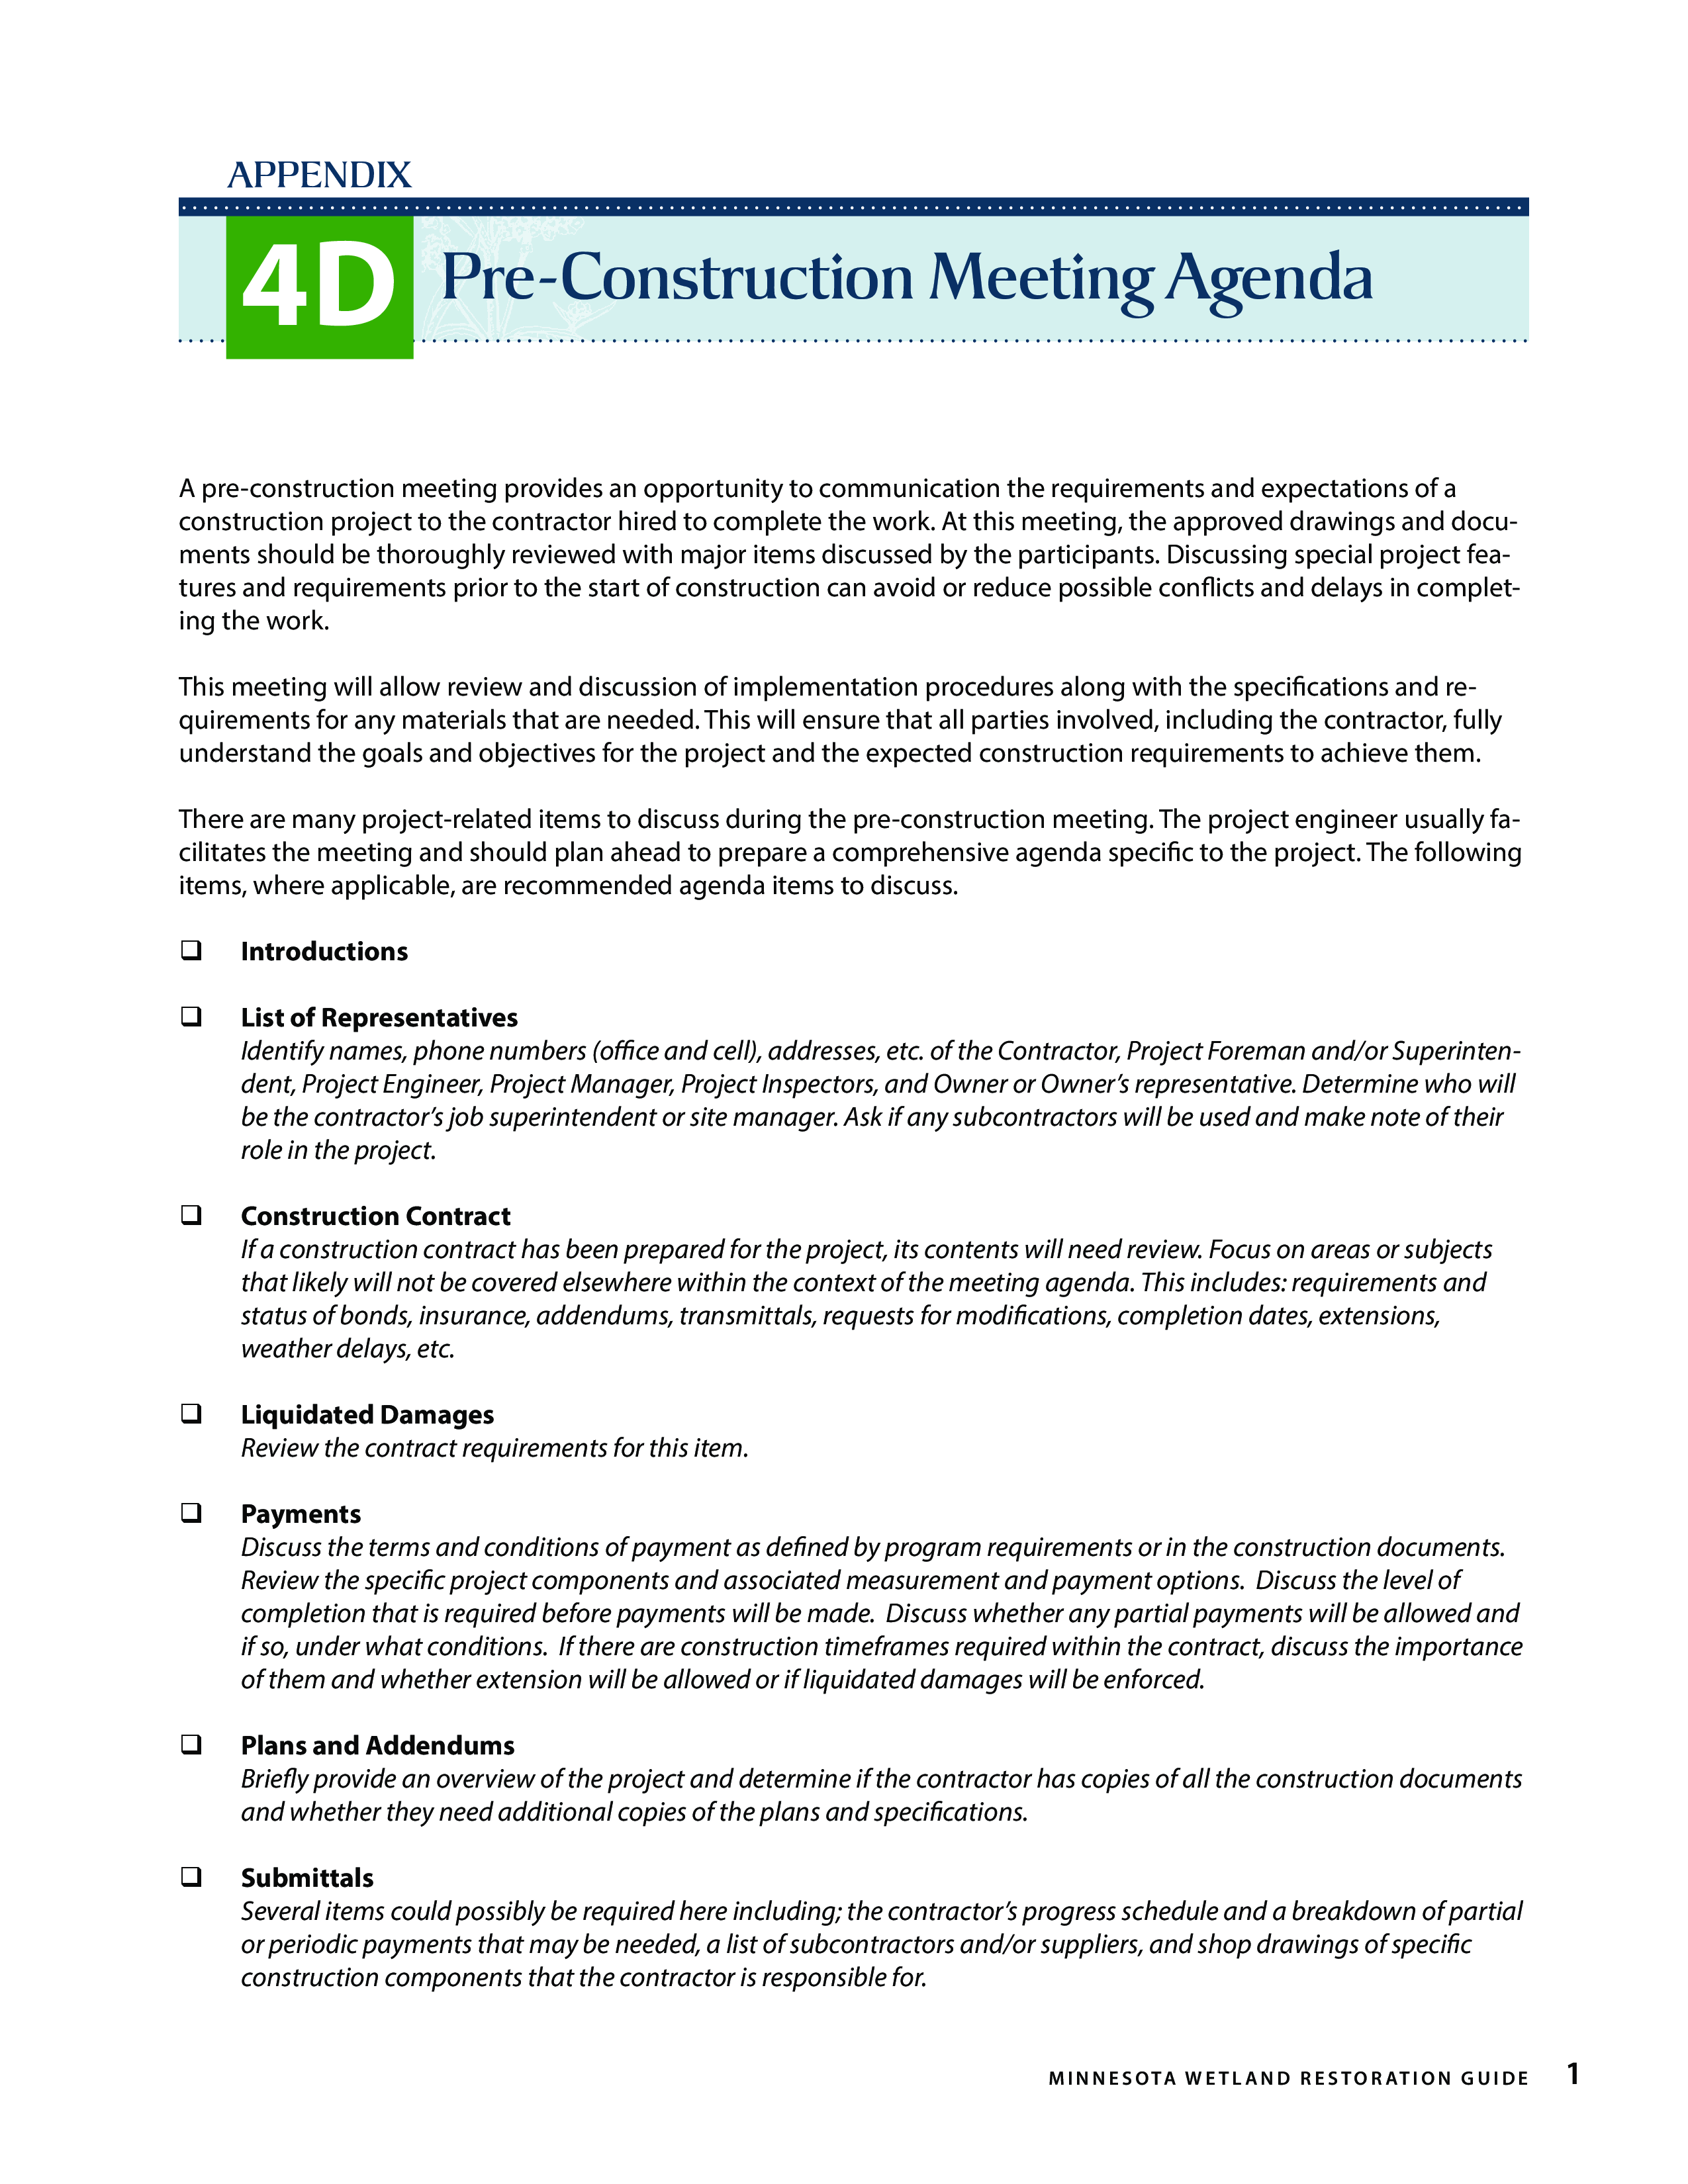 Pre Construction Meeting Agenda Templates at allbusinesstemplates com